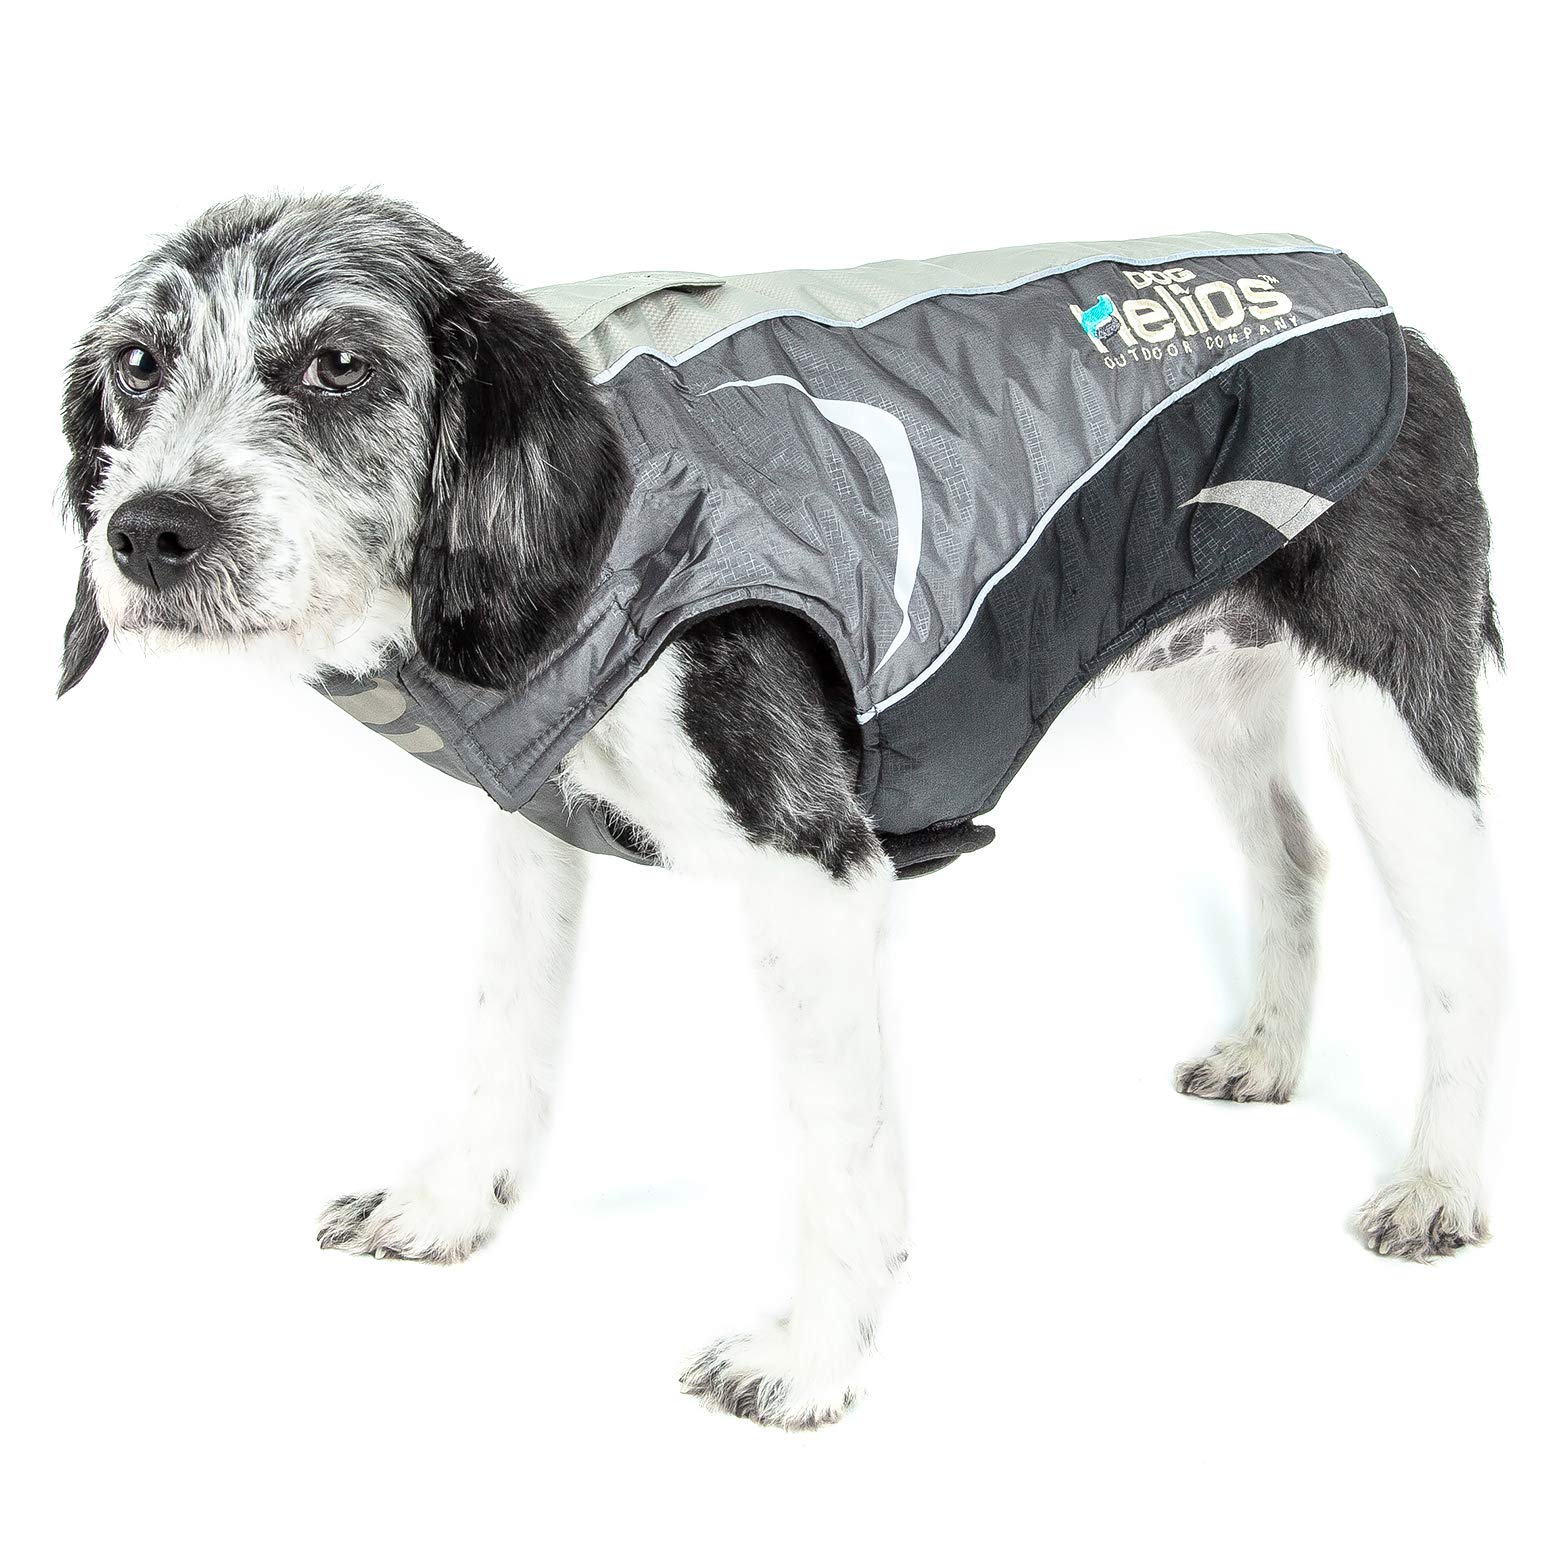 Dog Helios DOgHELIOS Altitude-Mountaineer Wrap-Velcro Protective Waterproof Pet Dog coat Jacket w Blackshark Technology, Large, Black, grey